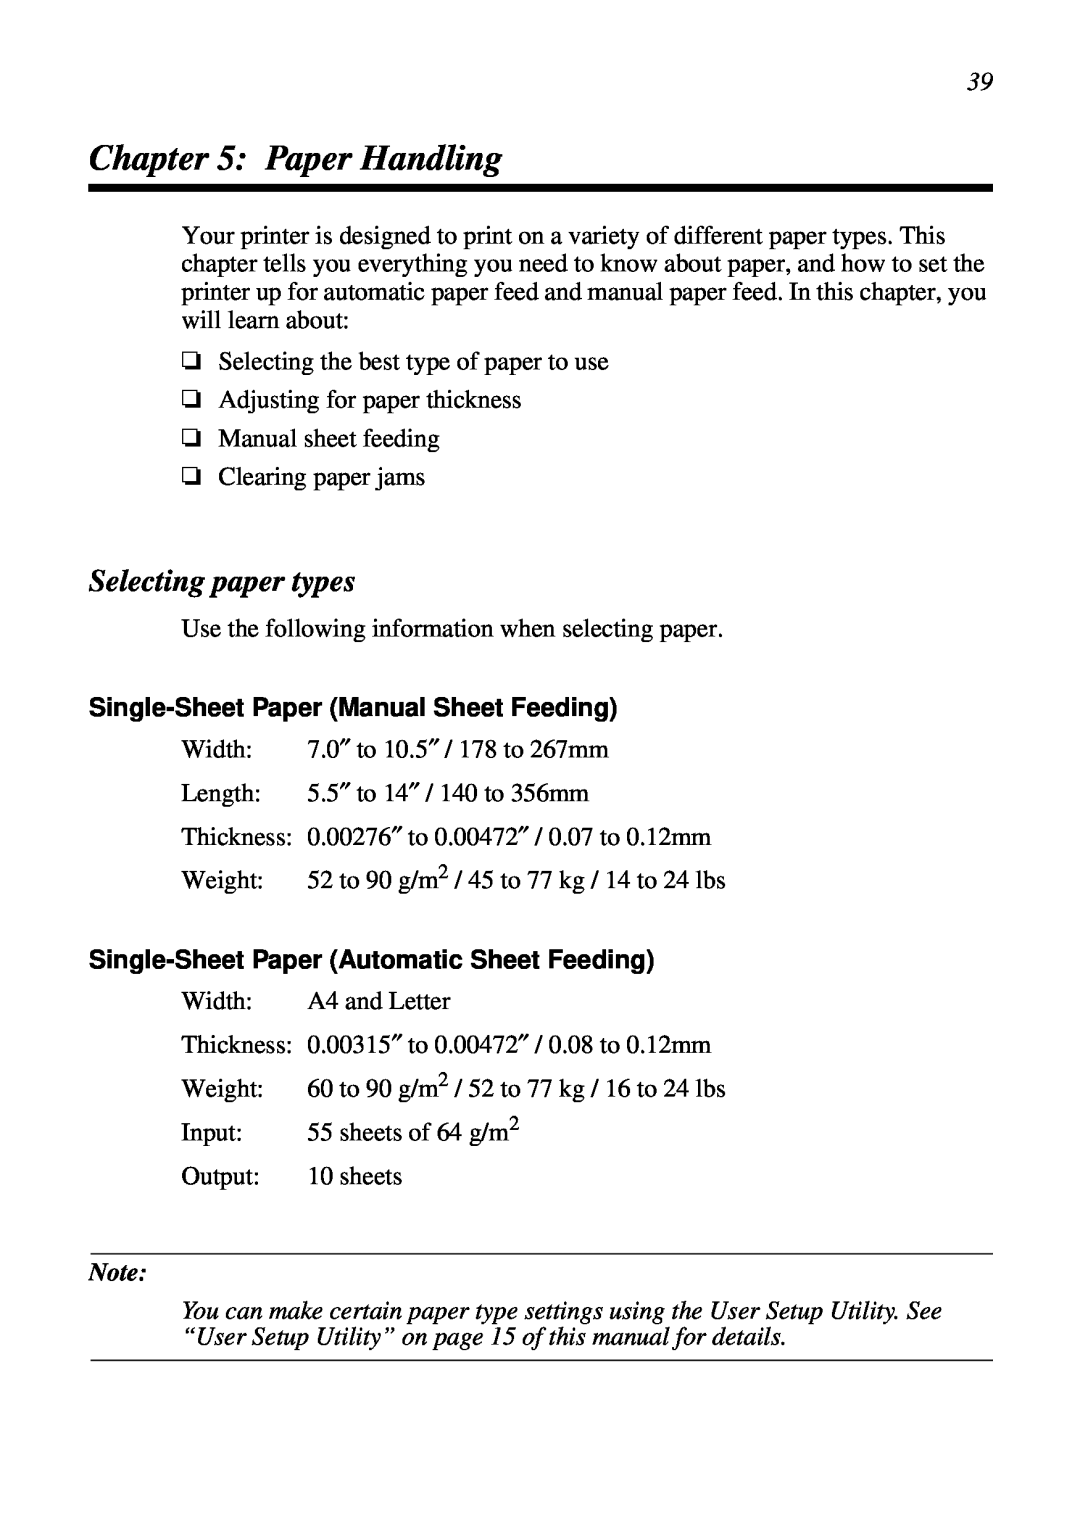 Star Micronics NX-2460C user manual Paper Handling, Selecting paper types 